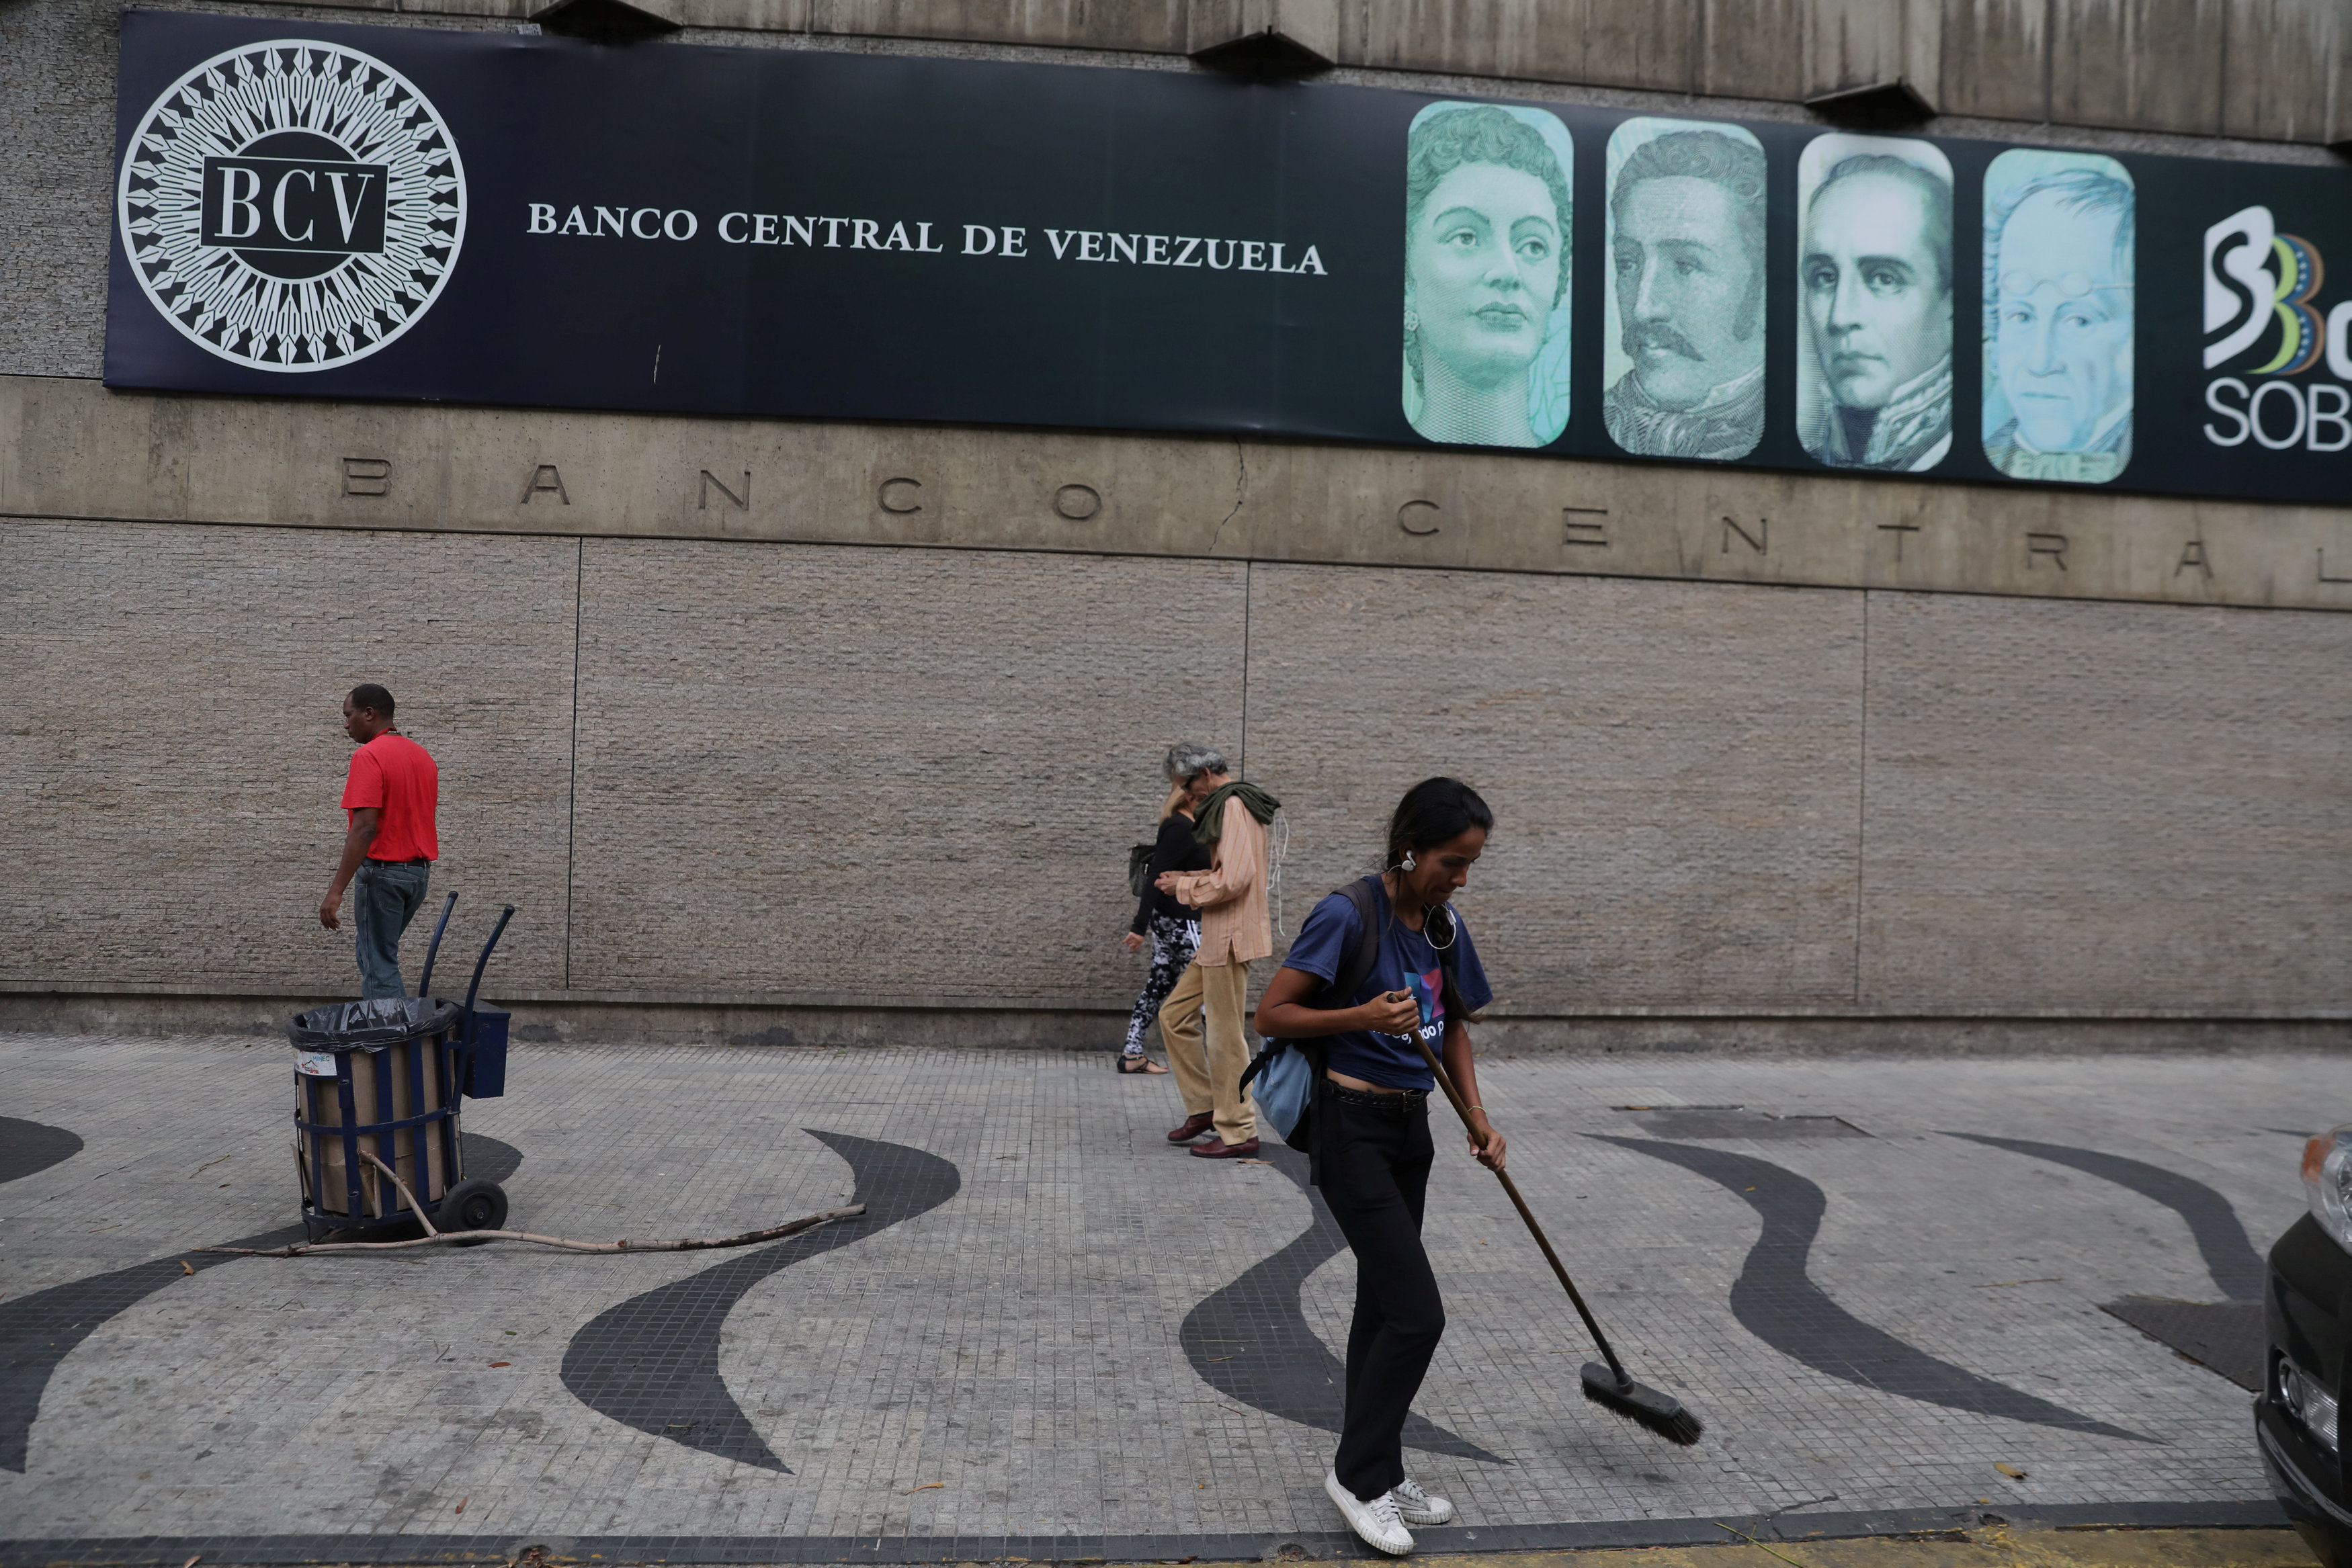 Banco Central de Venezuela obliga a bancos a vender millones de euros en efectivo